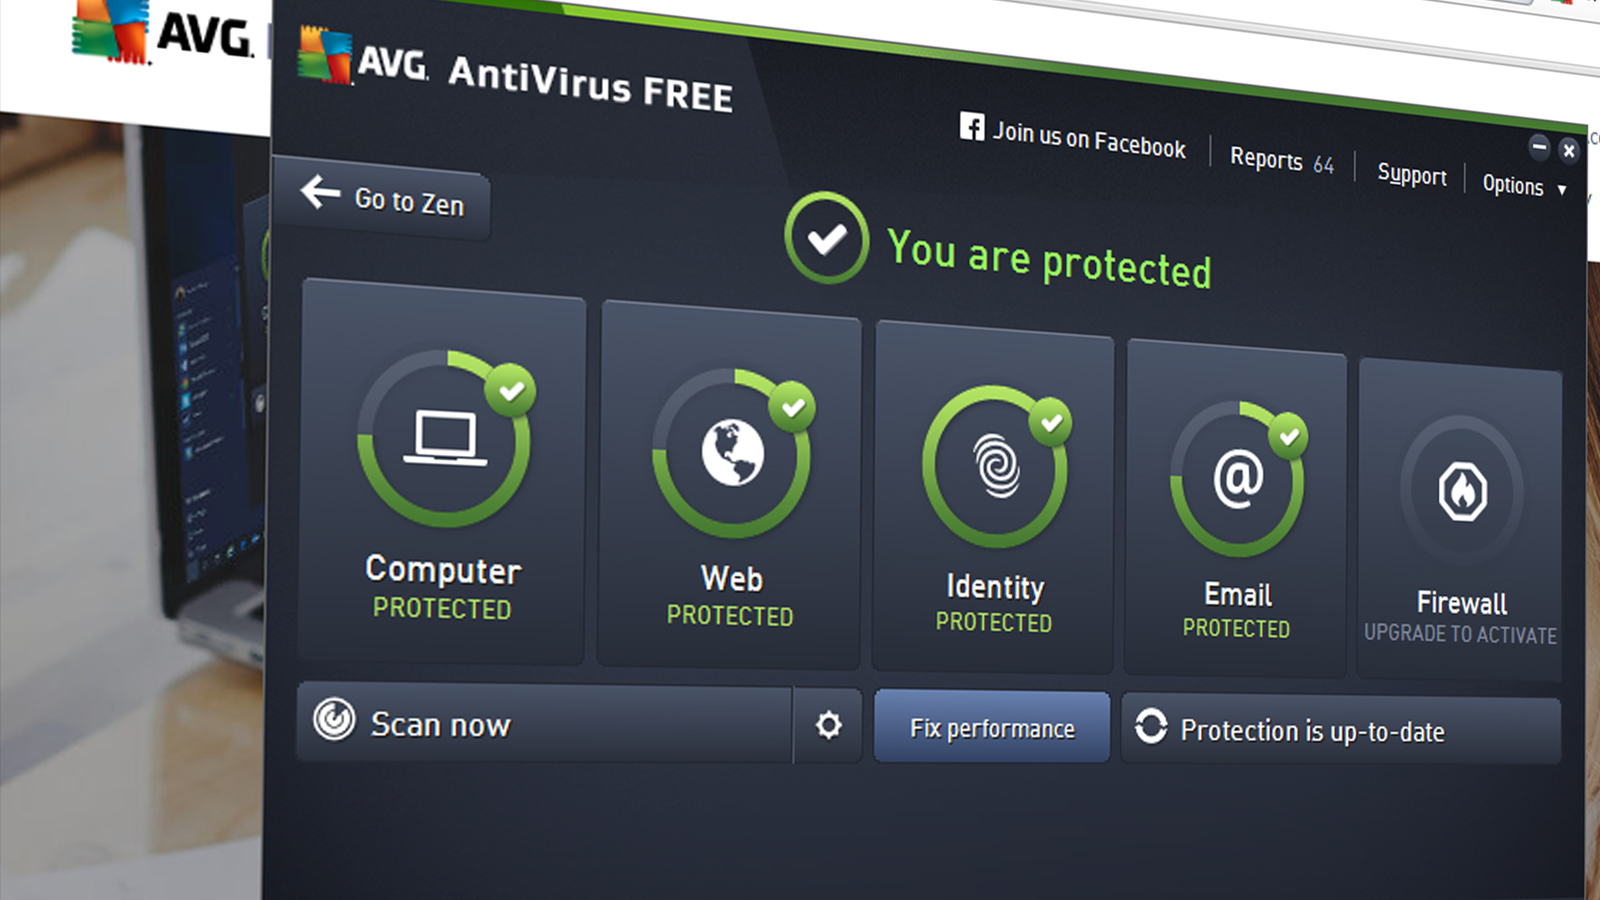 Download Avg Antivirus Free Software Review Free